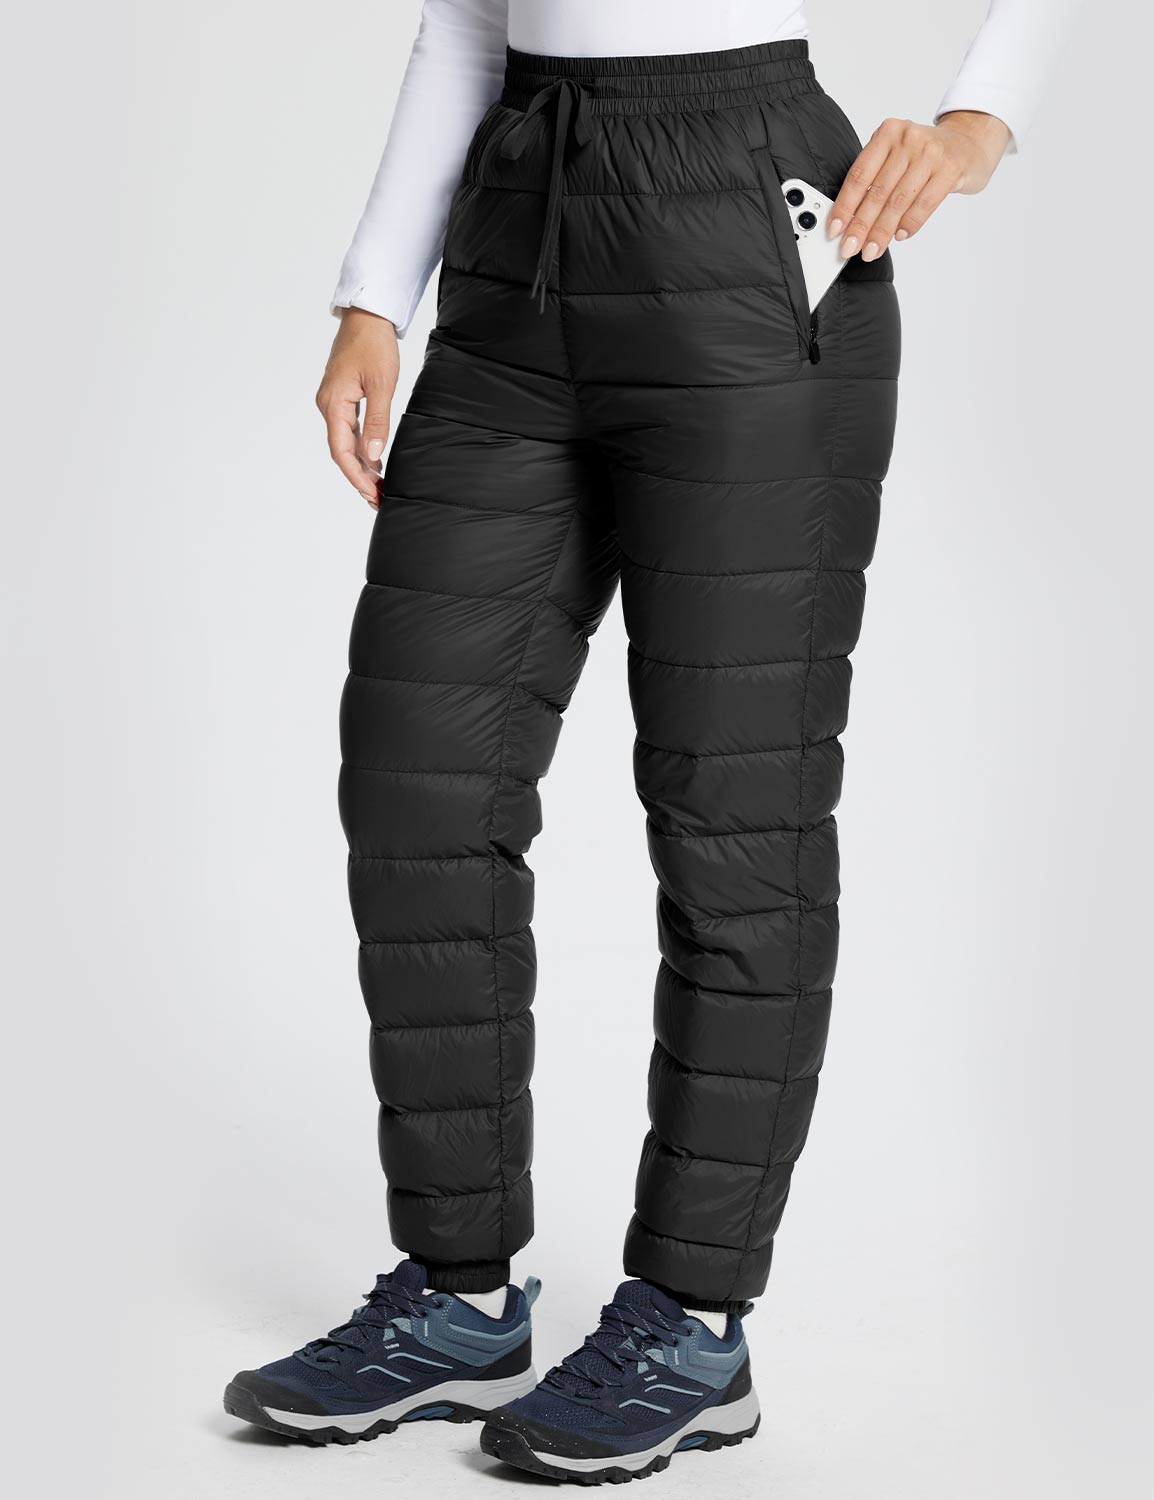 BALEAF Women's Hiking Pants Fleece Lined Snow Pant Black Size Large